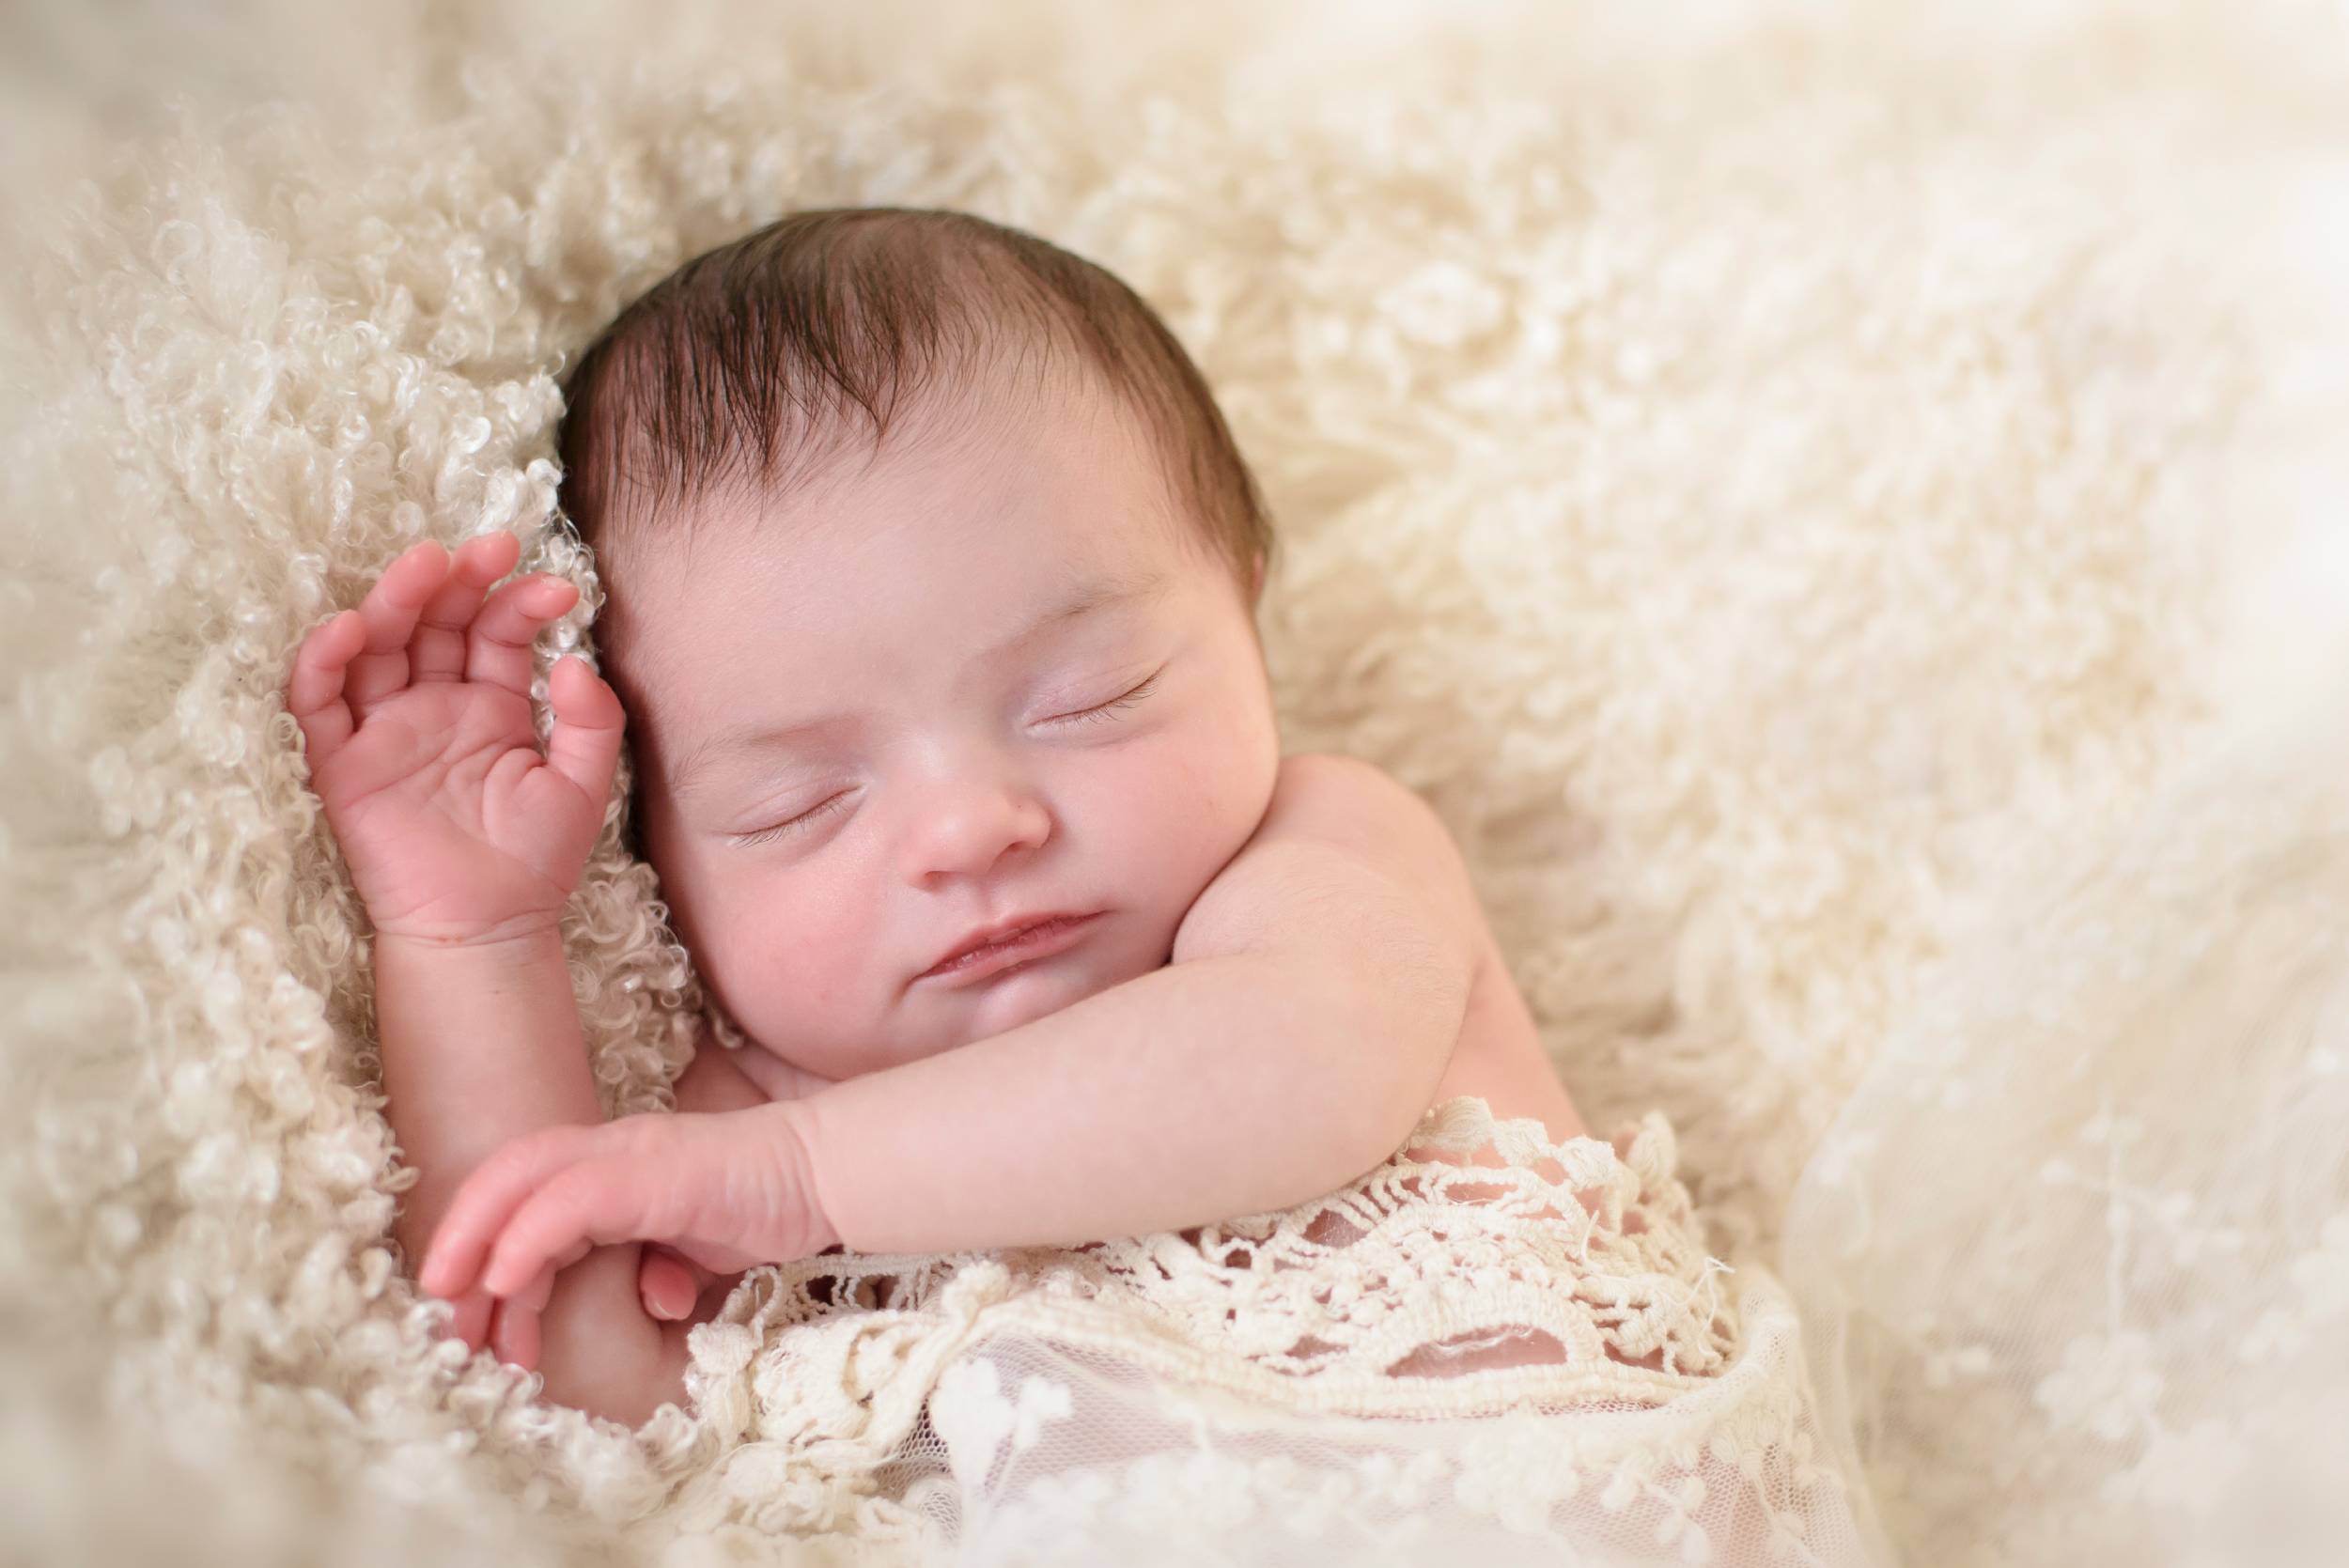 Happix-fotograaf-Wendy-Newborn-_-Baby-fotografie-025_J0cDHNGnI.jpg